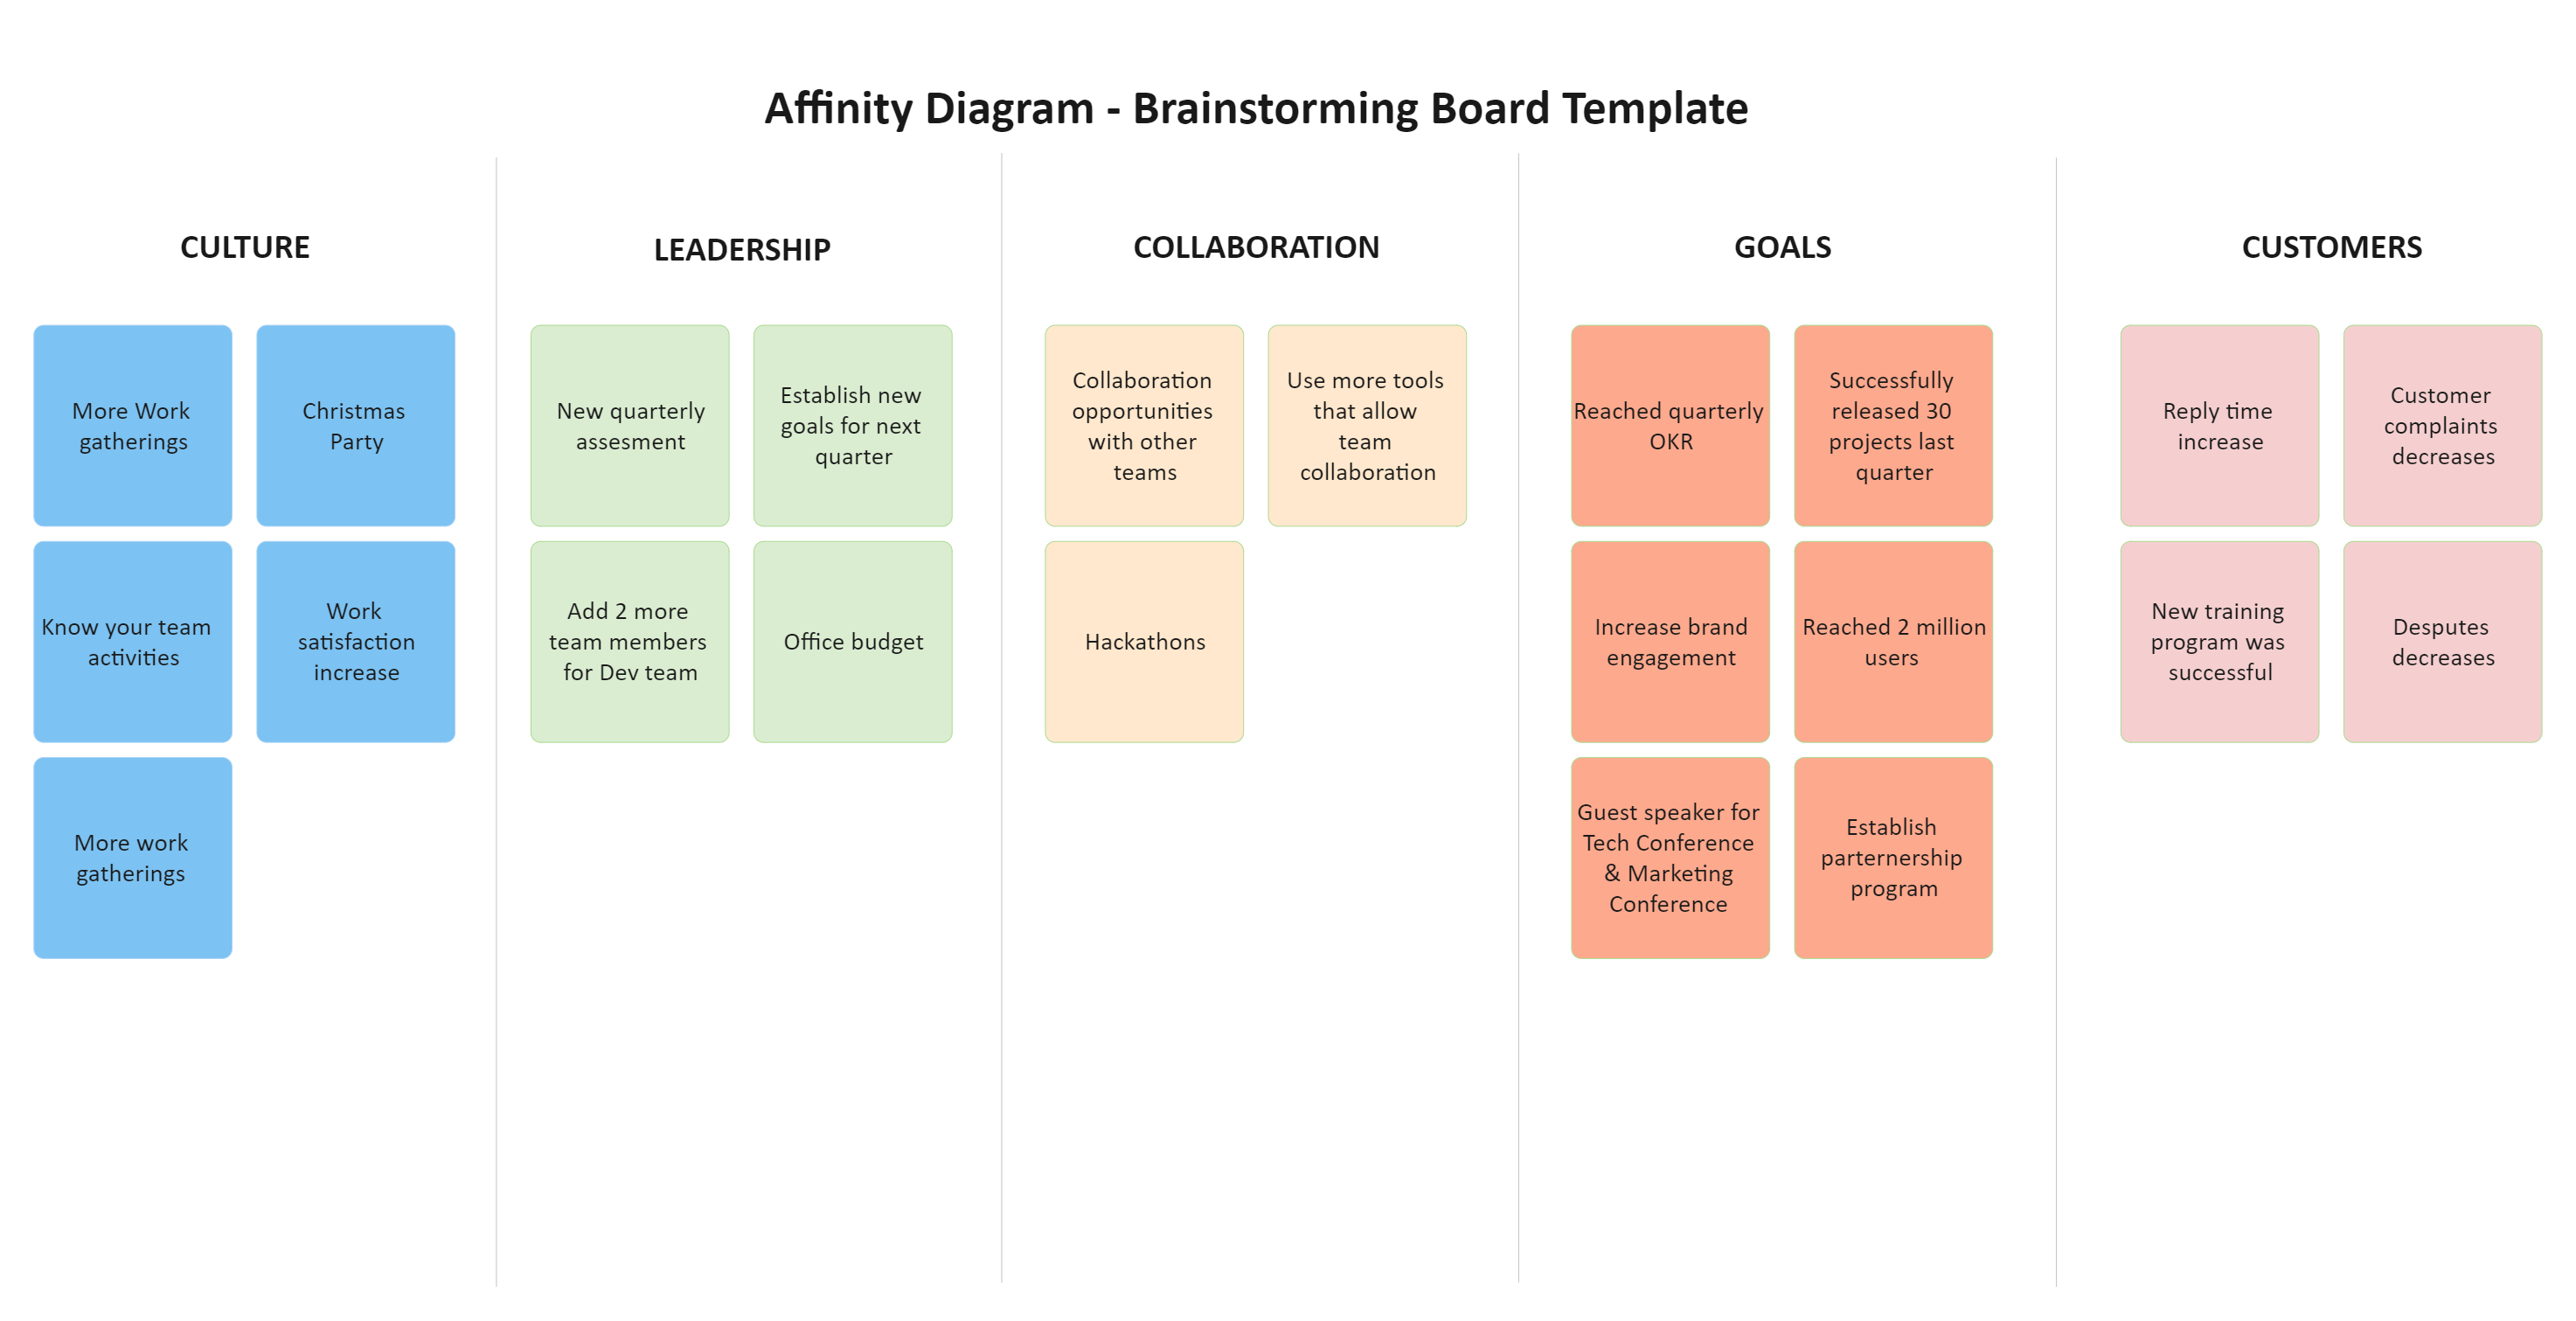 Affinity Diagram - Brainstorming Board Template